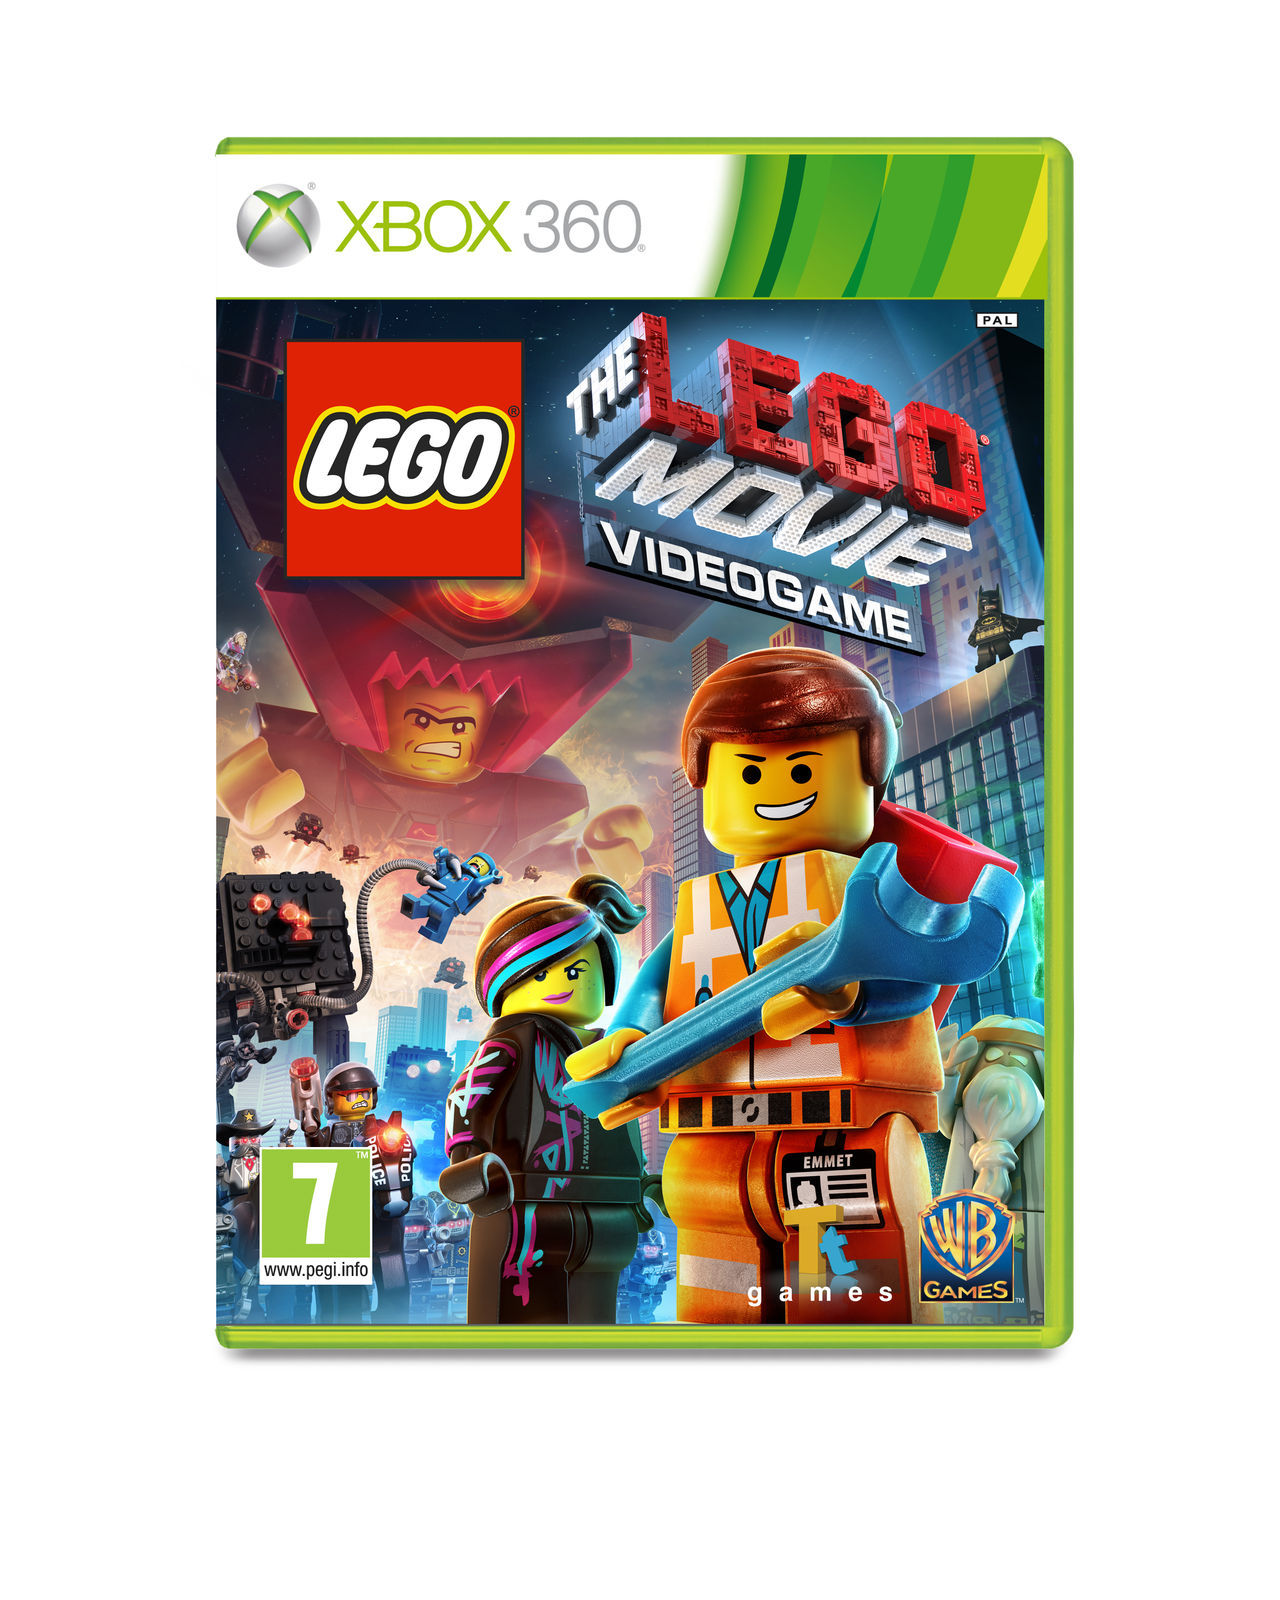 Trucos The Lego Movie Videogame Xbox 360 Claves Guias